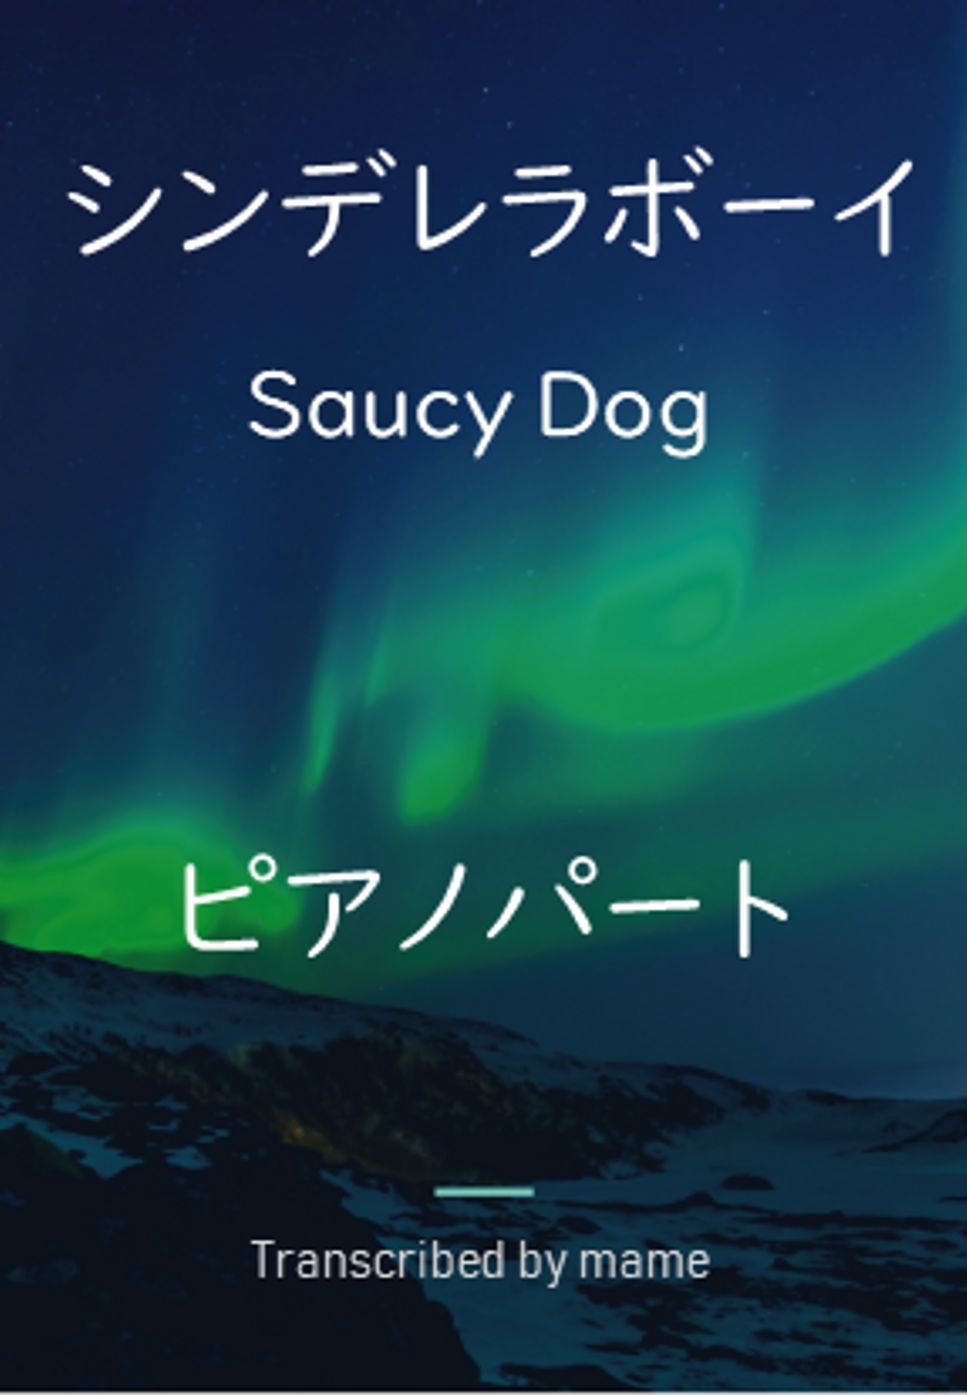 Saucy Dog - シンデレラボーイ (ピアノパート) by mame